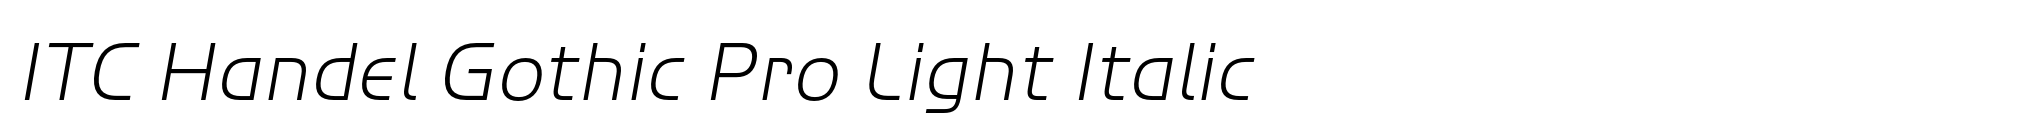 ITC Handel Gothic Pro Light Italic image